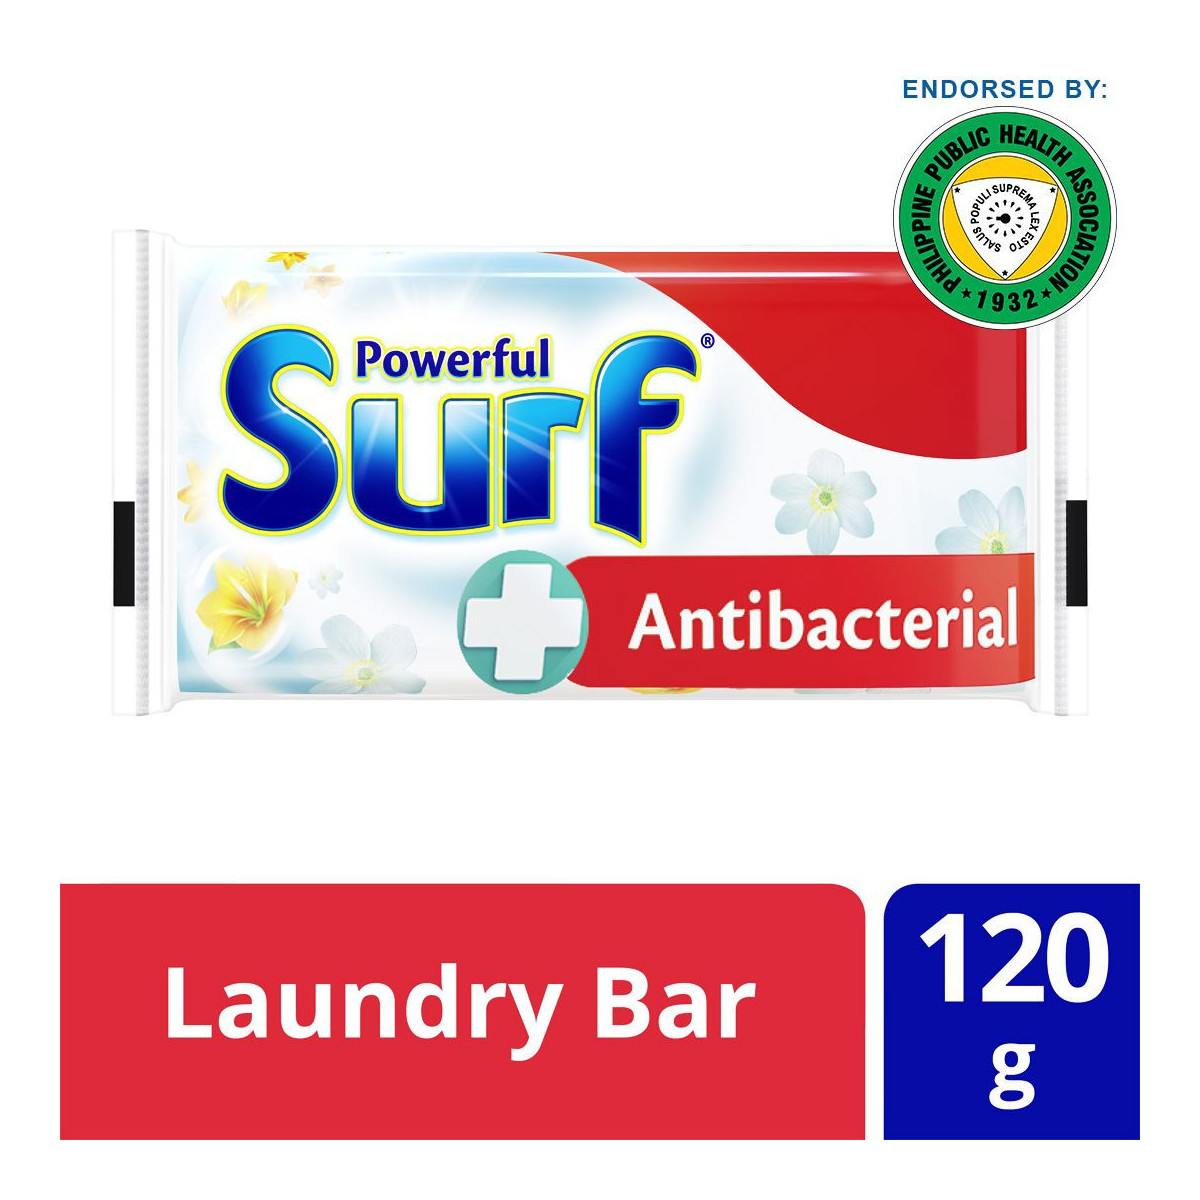 Surf Bar Detergent Antibacterial 120G Jumbo Cut